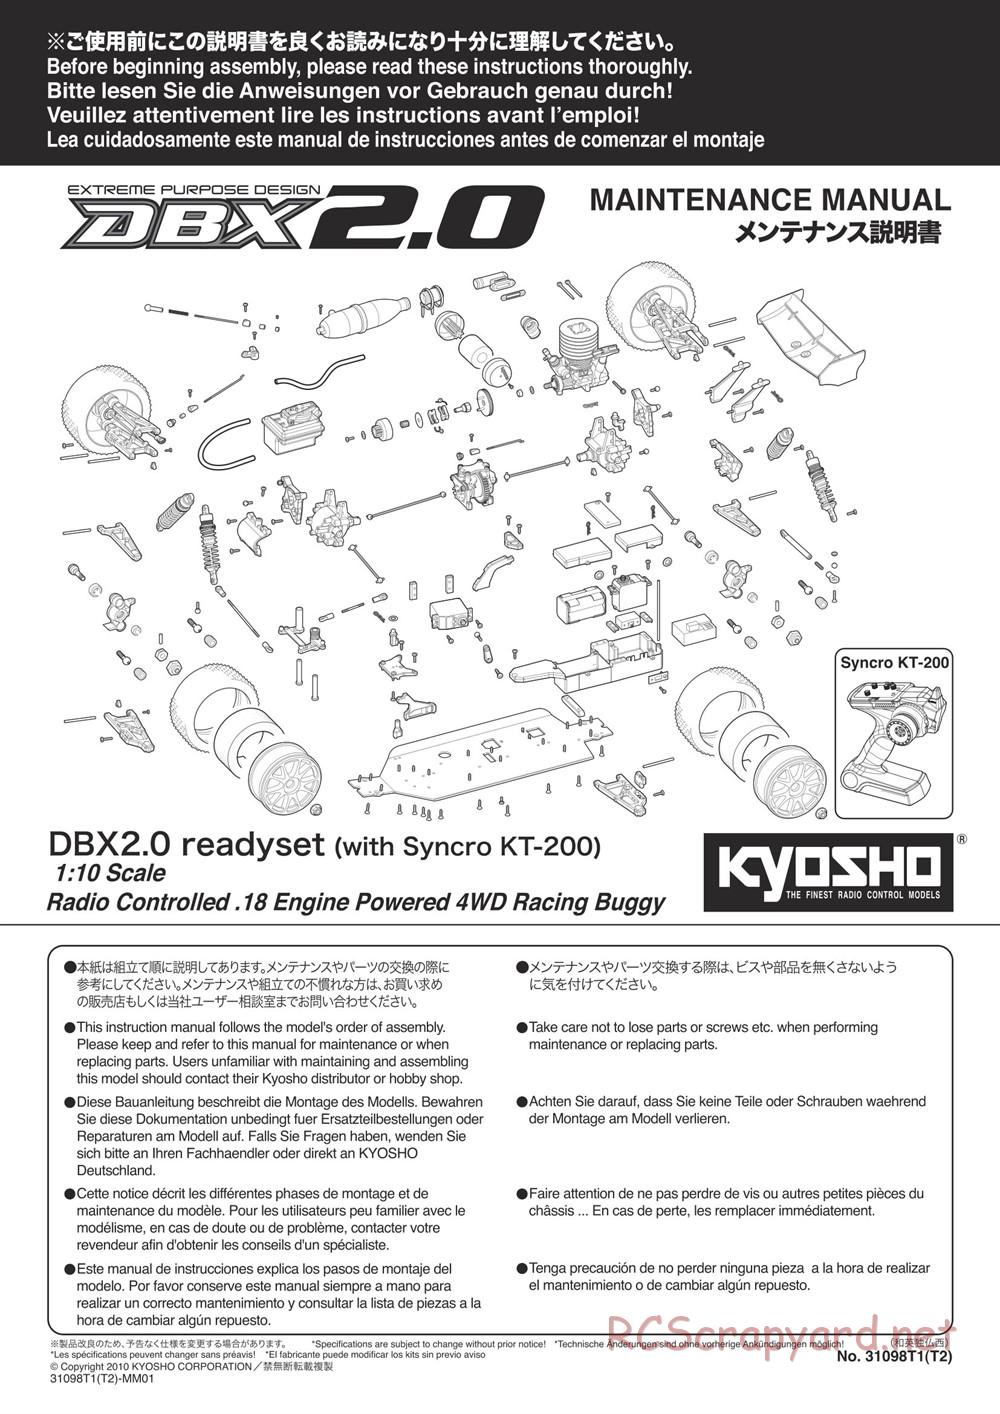 Kyosho - DBX 2.0 - Manual - Page 1